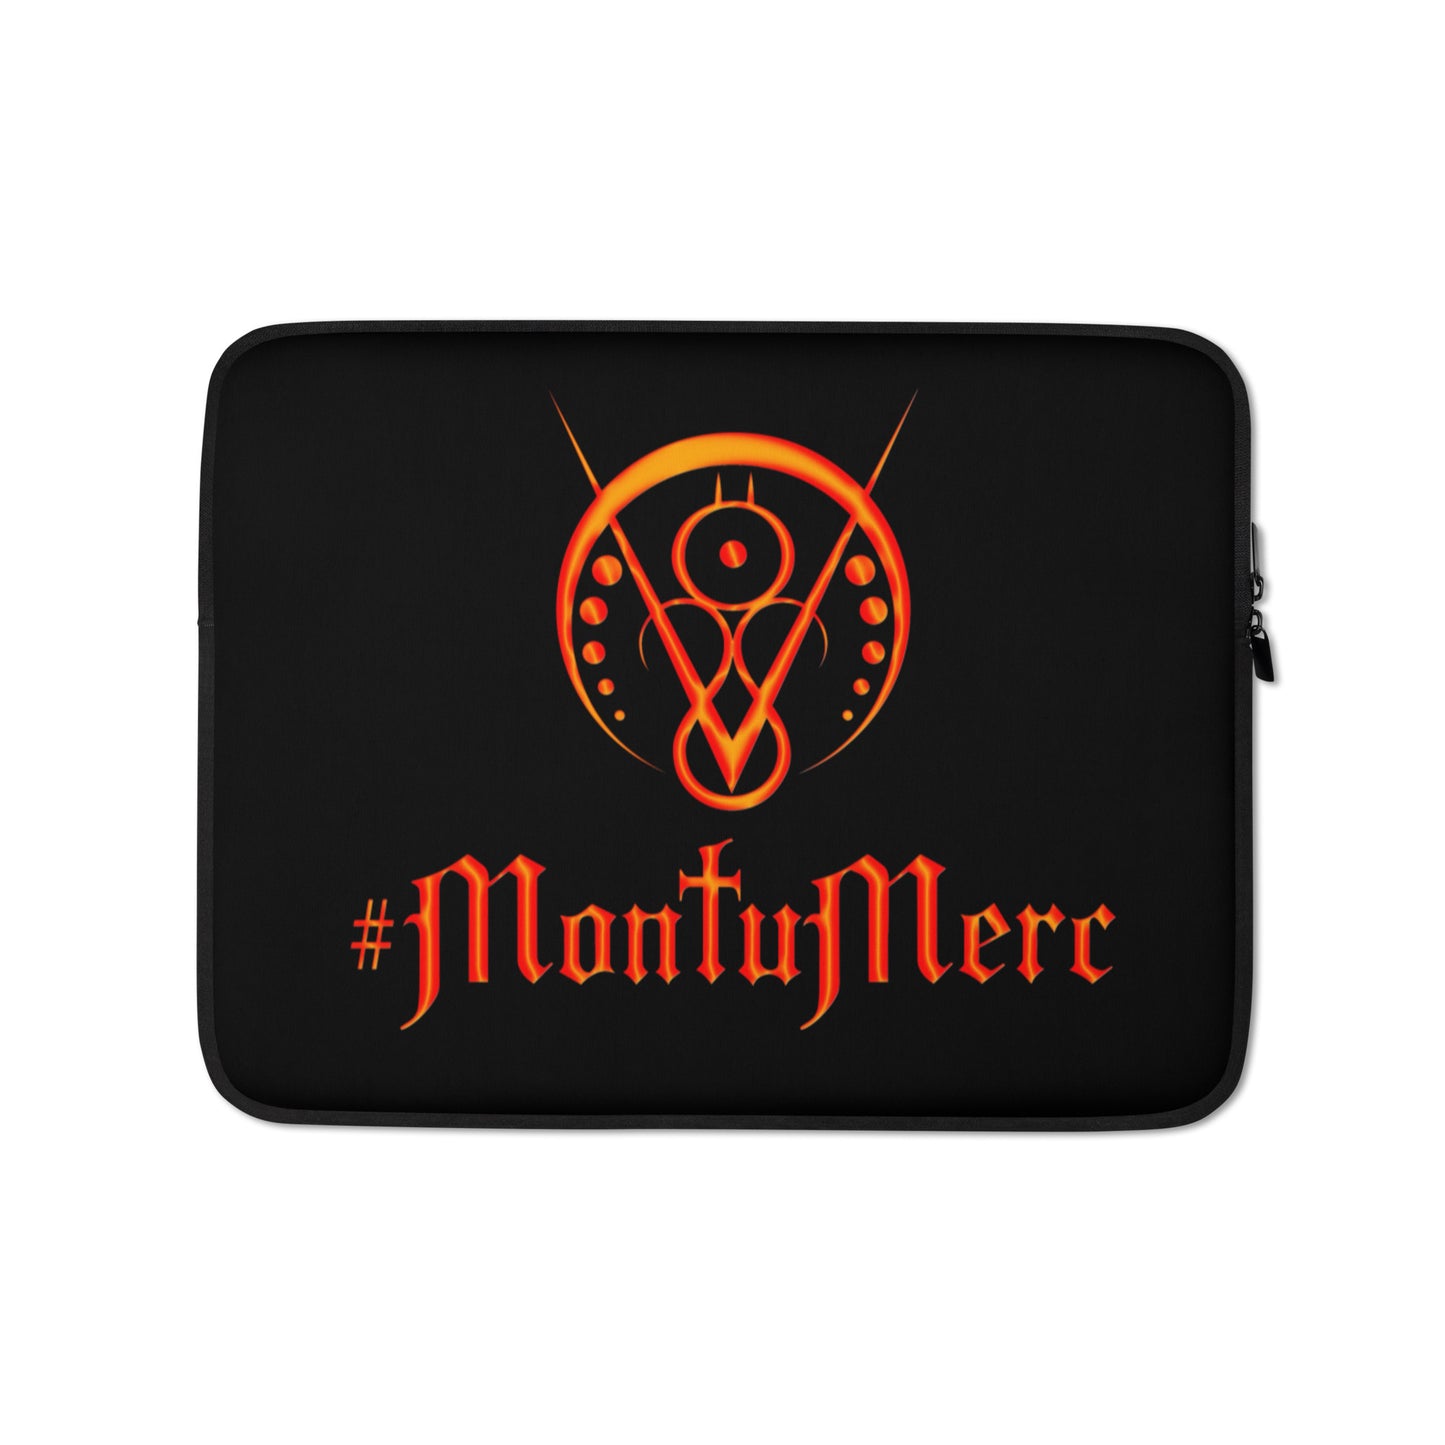 #MontuMerc Sacral Laptop Sleeve